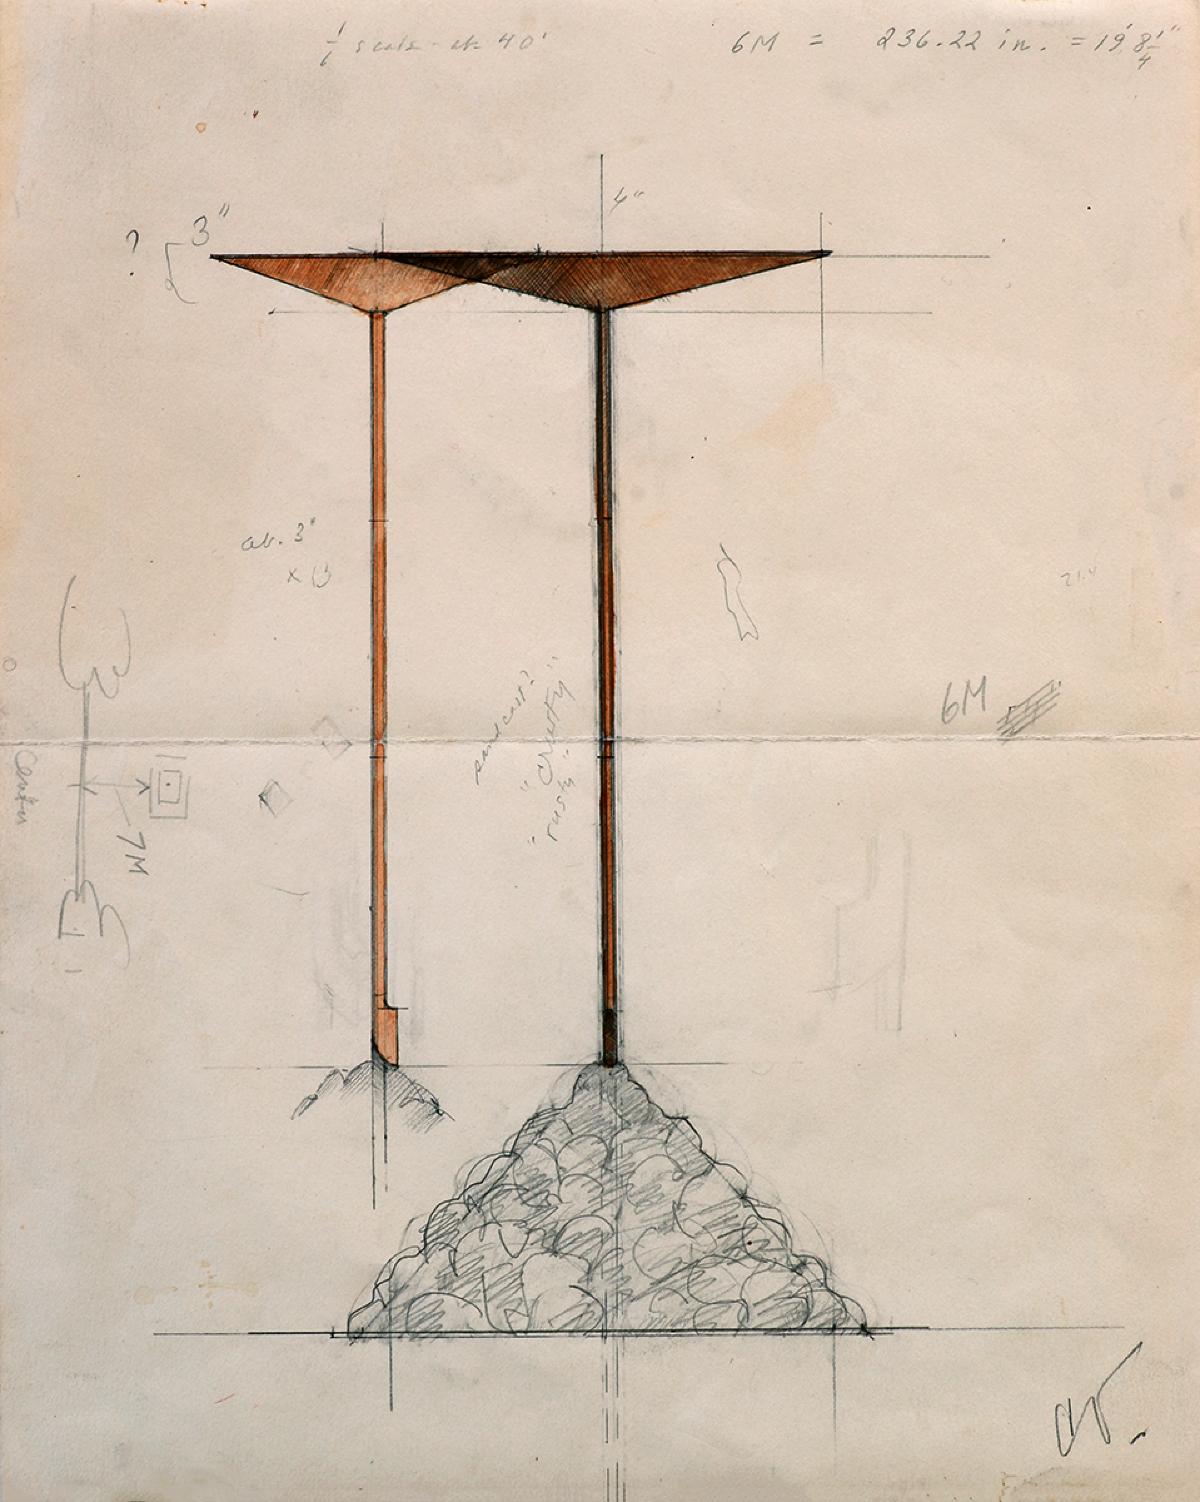 C. Oldenburg and C. van Bruggen, <em>Wayside Drainpipe Drawing</em>, 1978